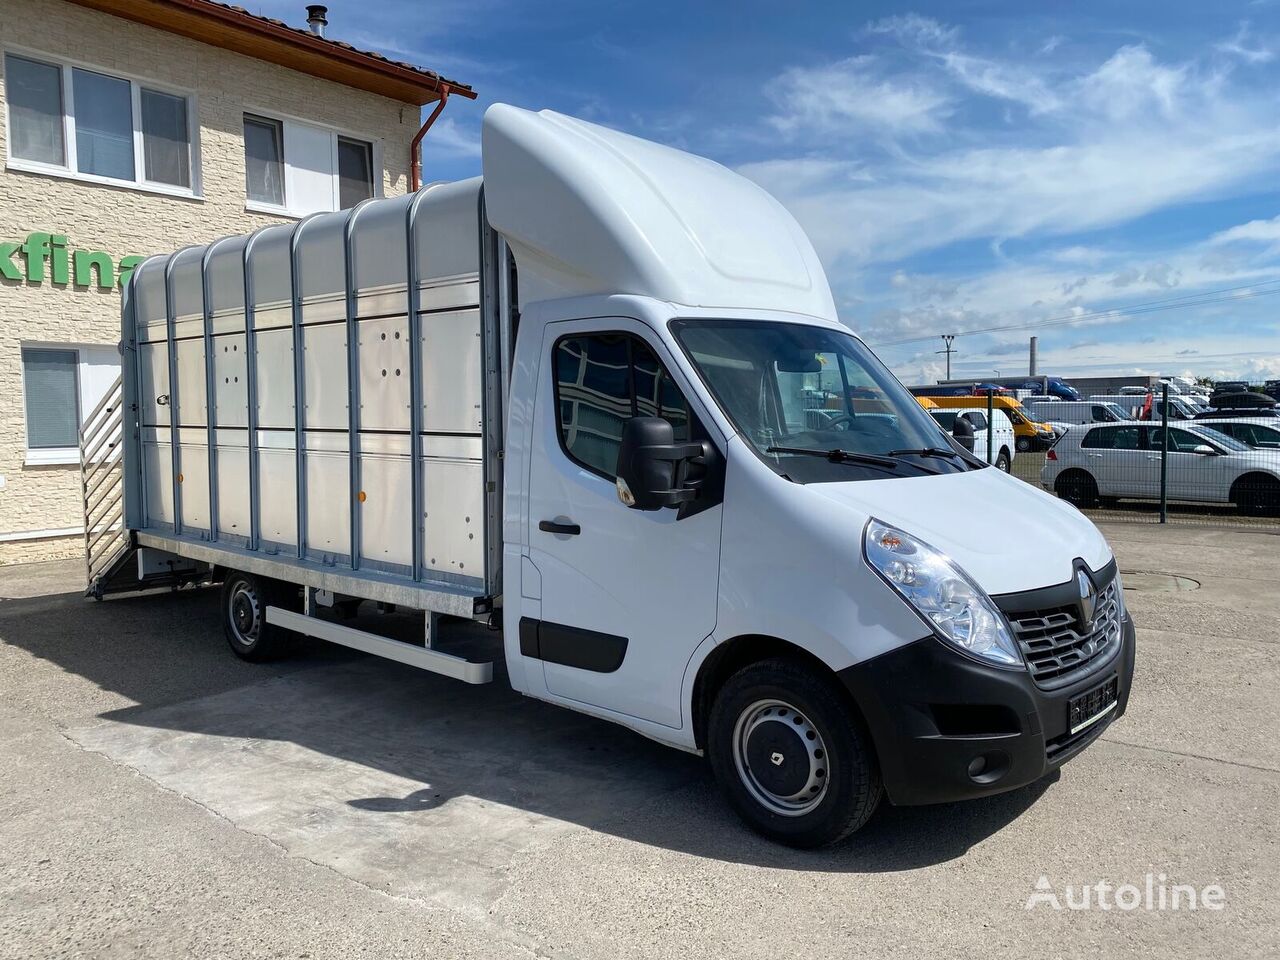 Renault 2019 VIN 014 livestock truck